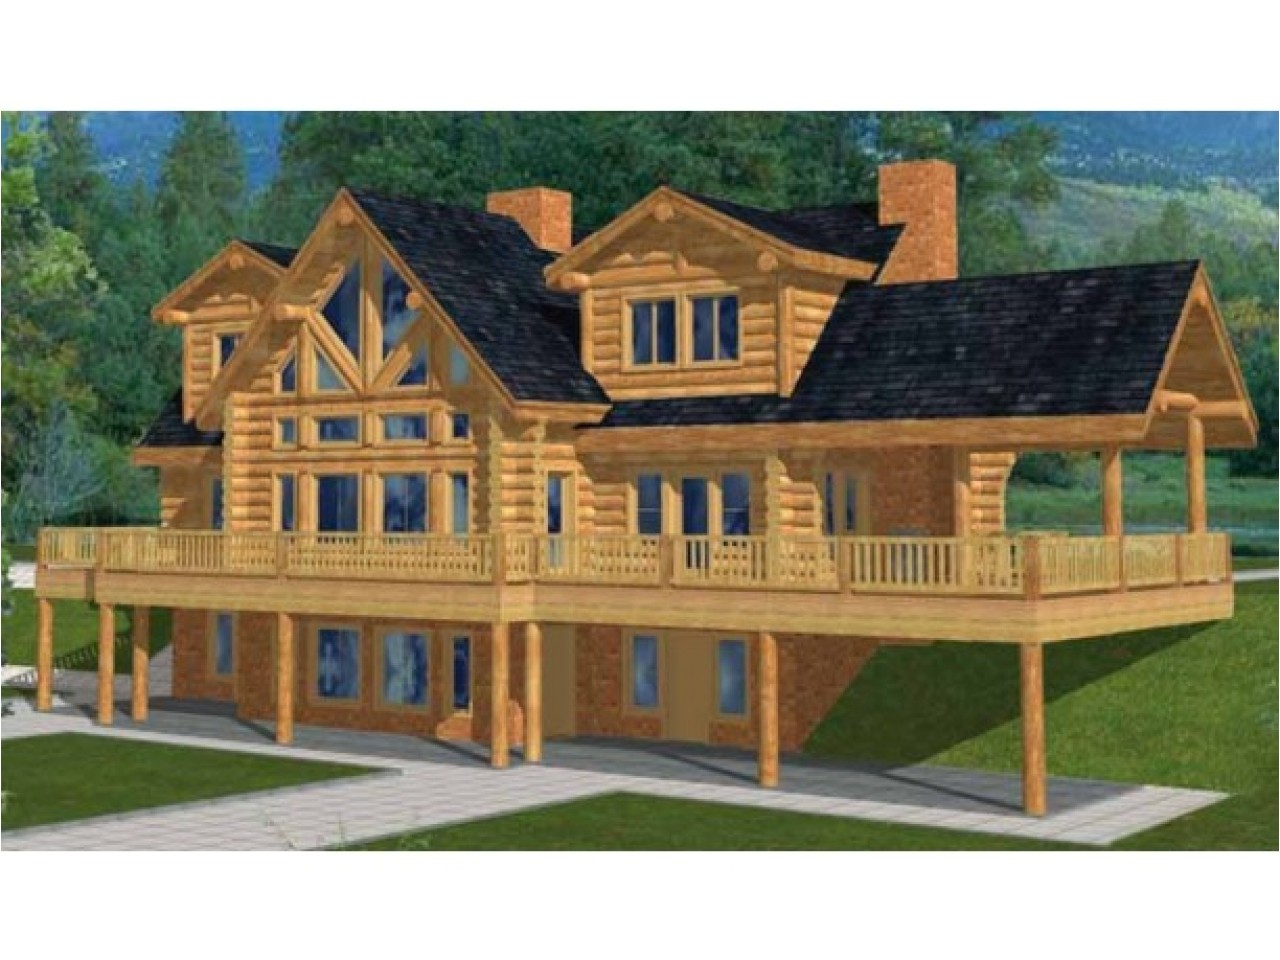 3658fa801f53b943 two story log cabin house plans custom log cabins